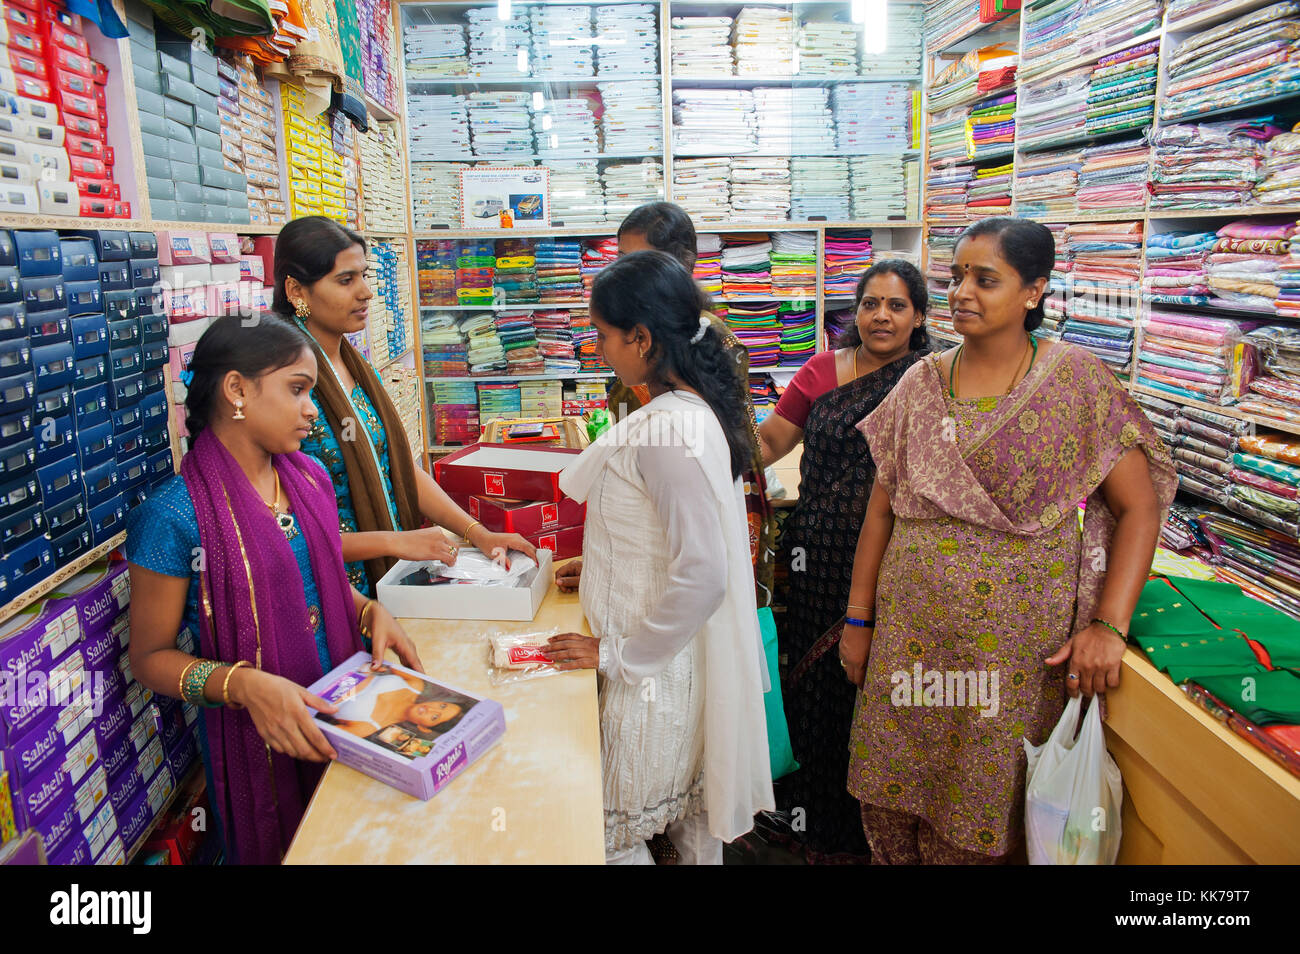 https://c8.alamy.com/comp/KK79T7/indian-womans-buying-lingerie-at-a-shop-in-bangalore-karnataka-india-KK79T7.jpg